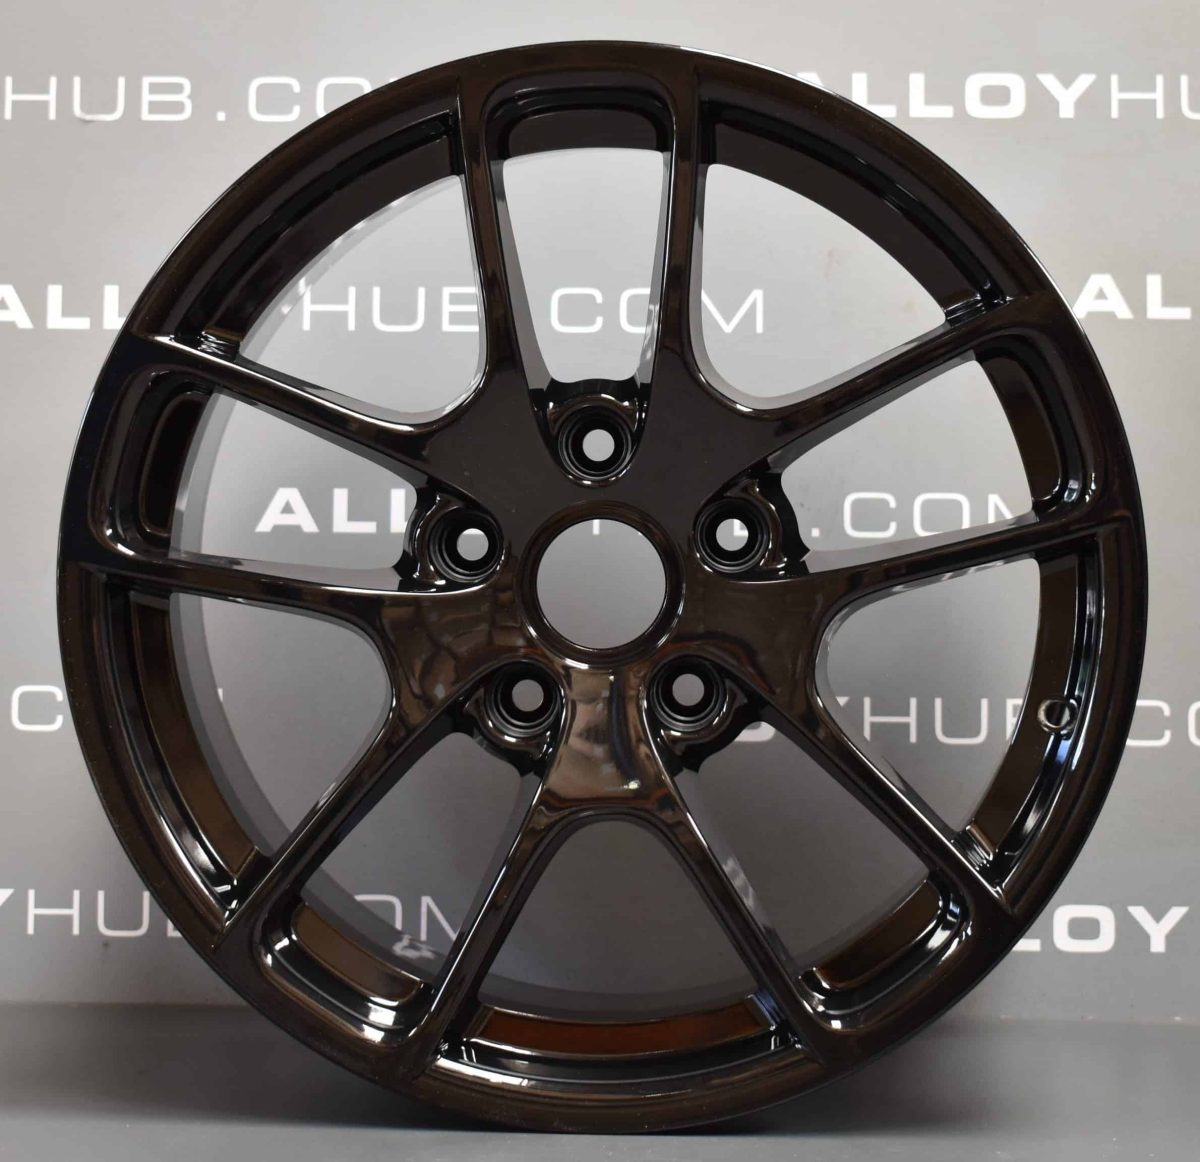 Genuine Porsche Cayman 5 Twin Spoke 18" inch Alloy Wheels with Gloss Black Finish 98136212004 98136212204